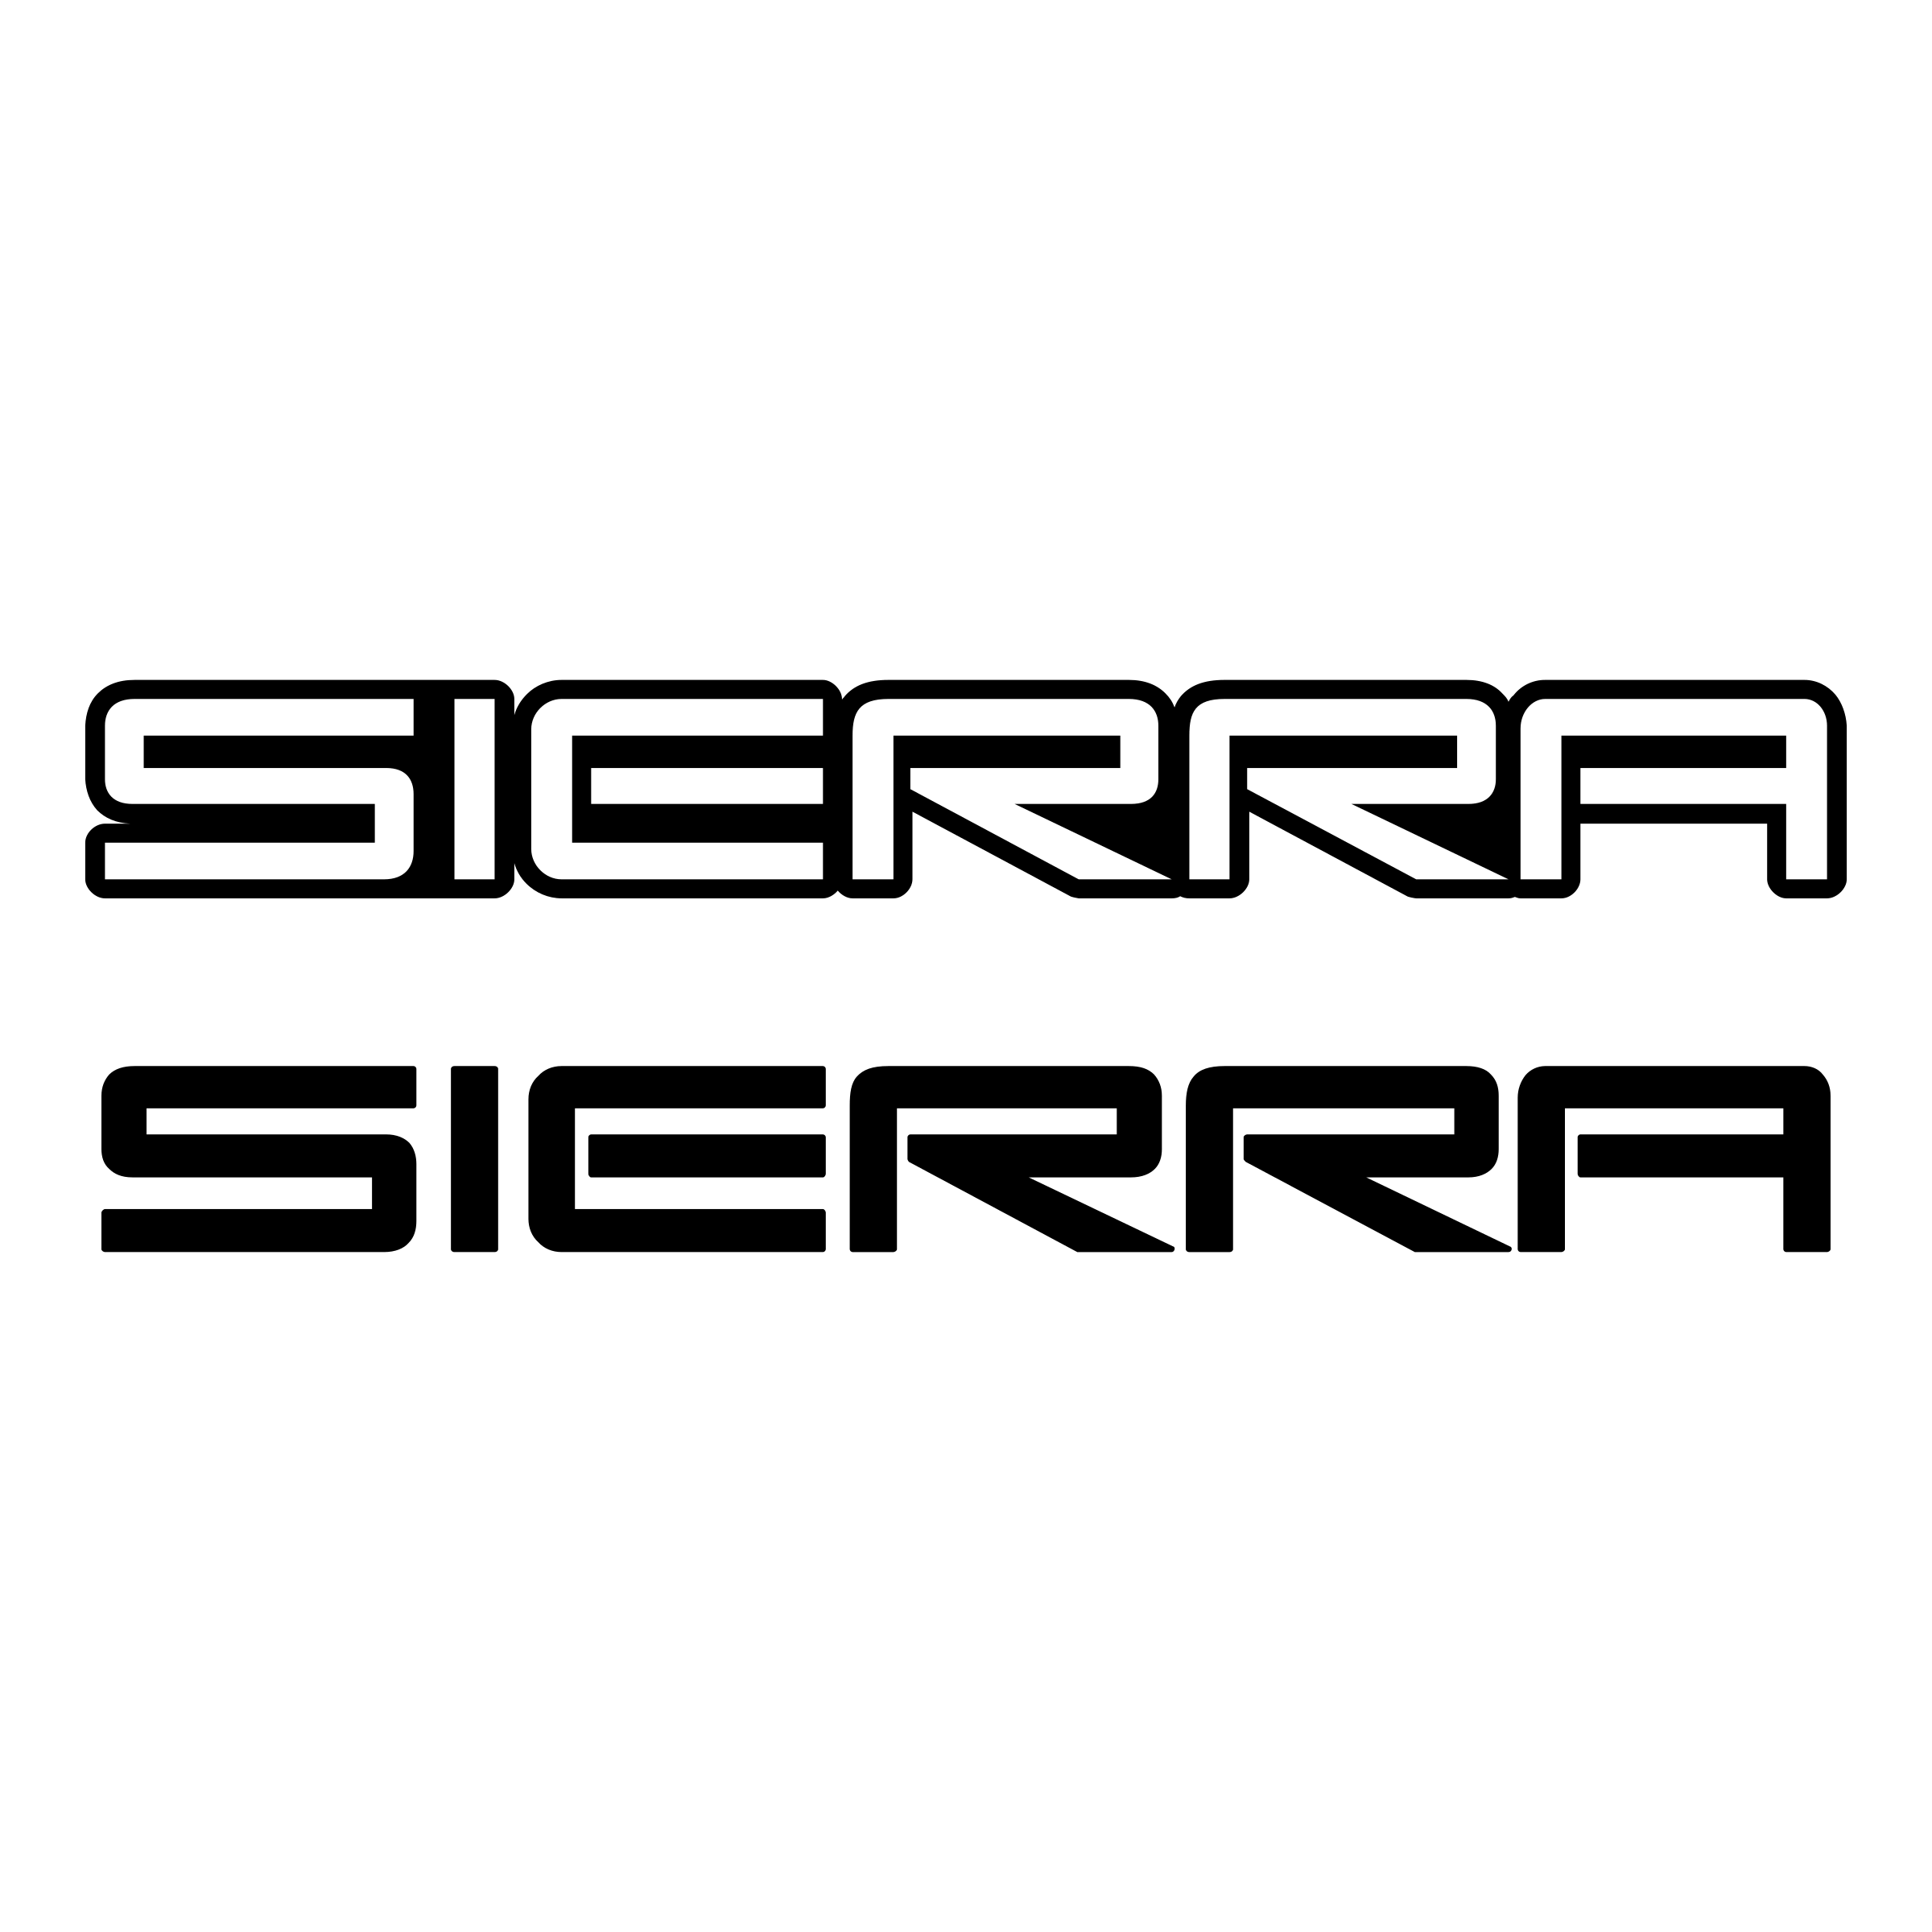 Seirra Logo - Sierra Logo PNG Transparent & SVG Vector - Freebie Supply